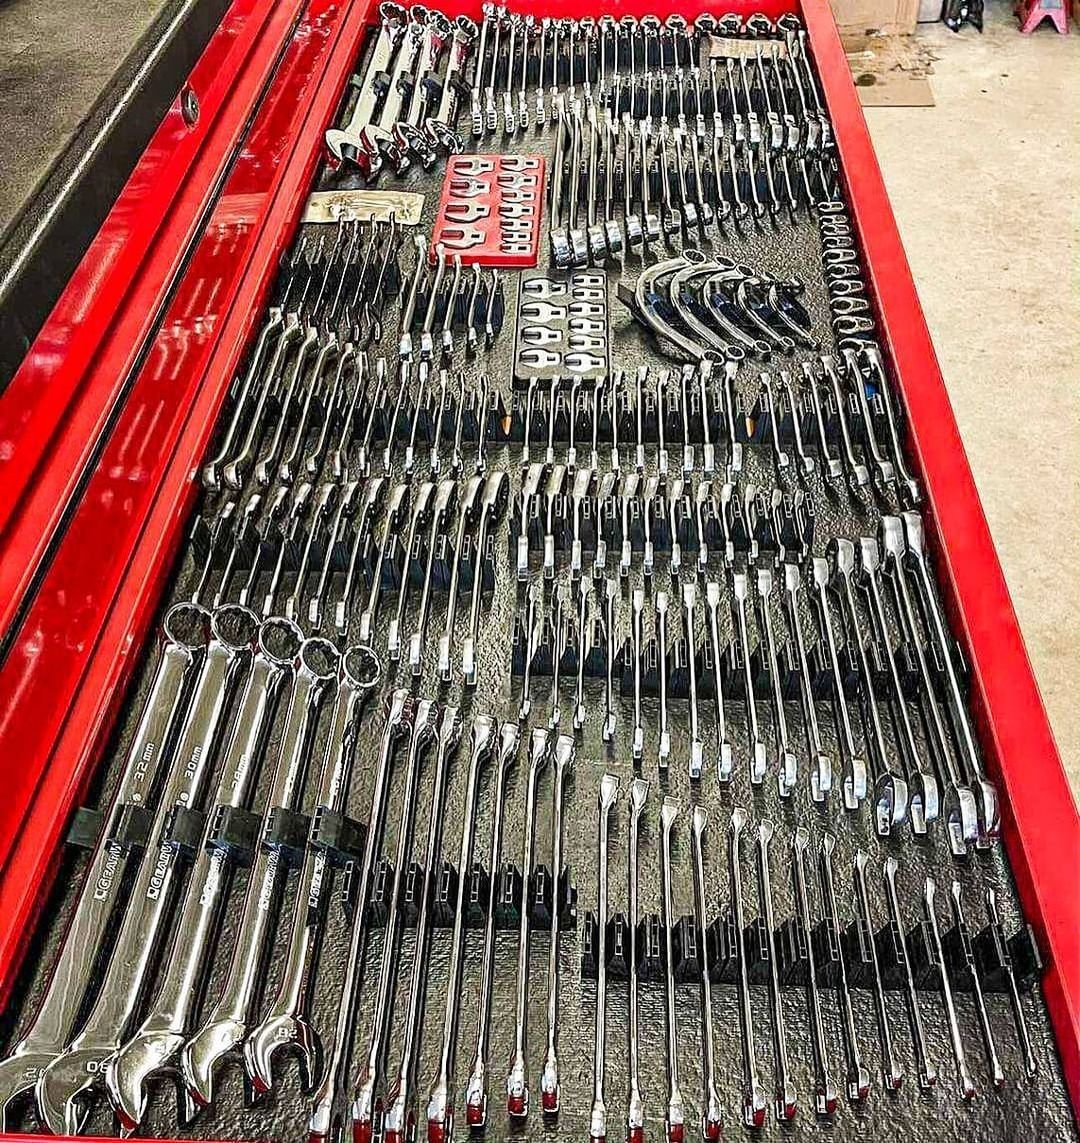 Pro - Large Wrench Organizers - Toolbox Widget USA